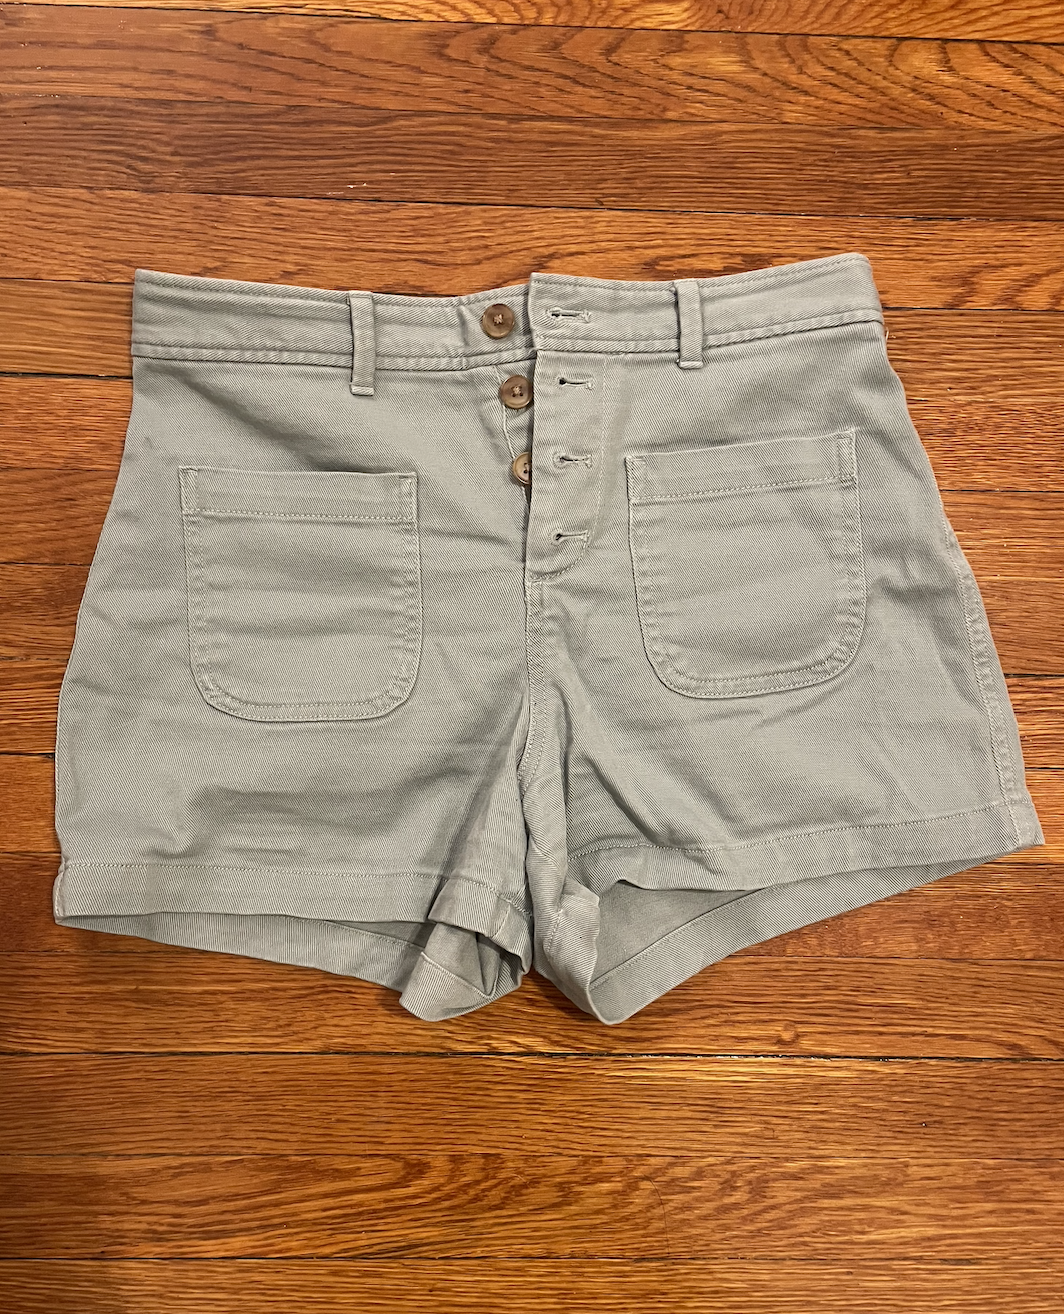 Gap green denim shorts - women's size 4 - EUC - button up front